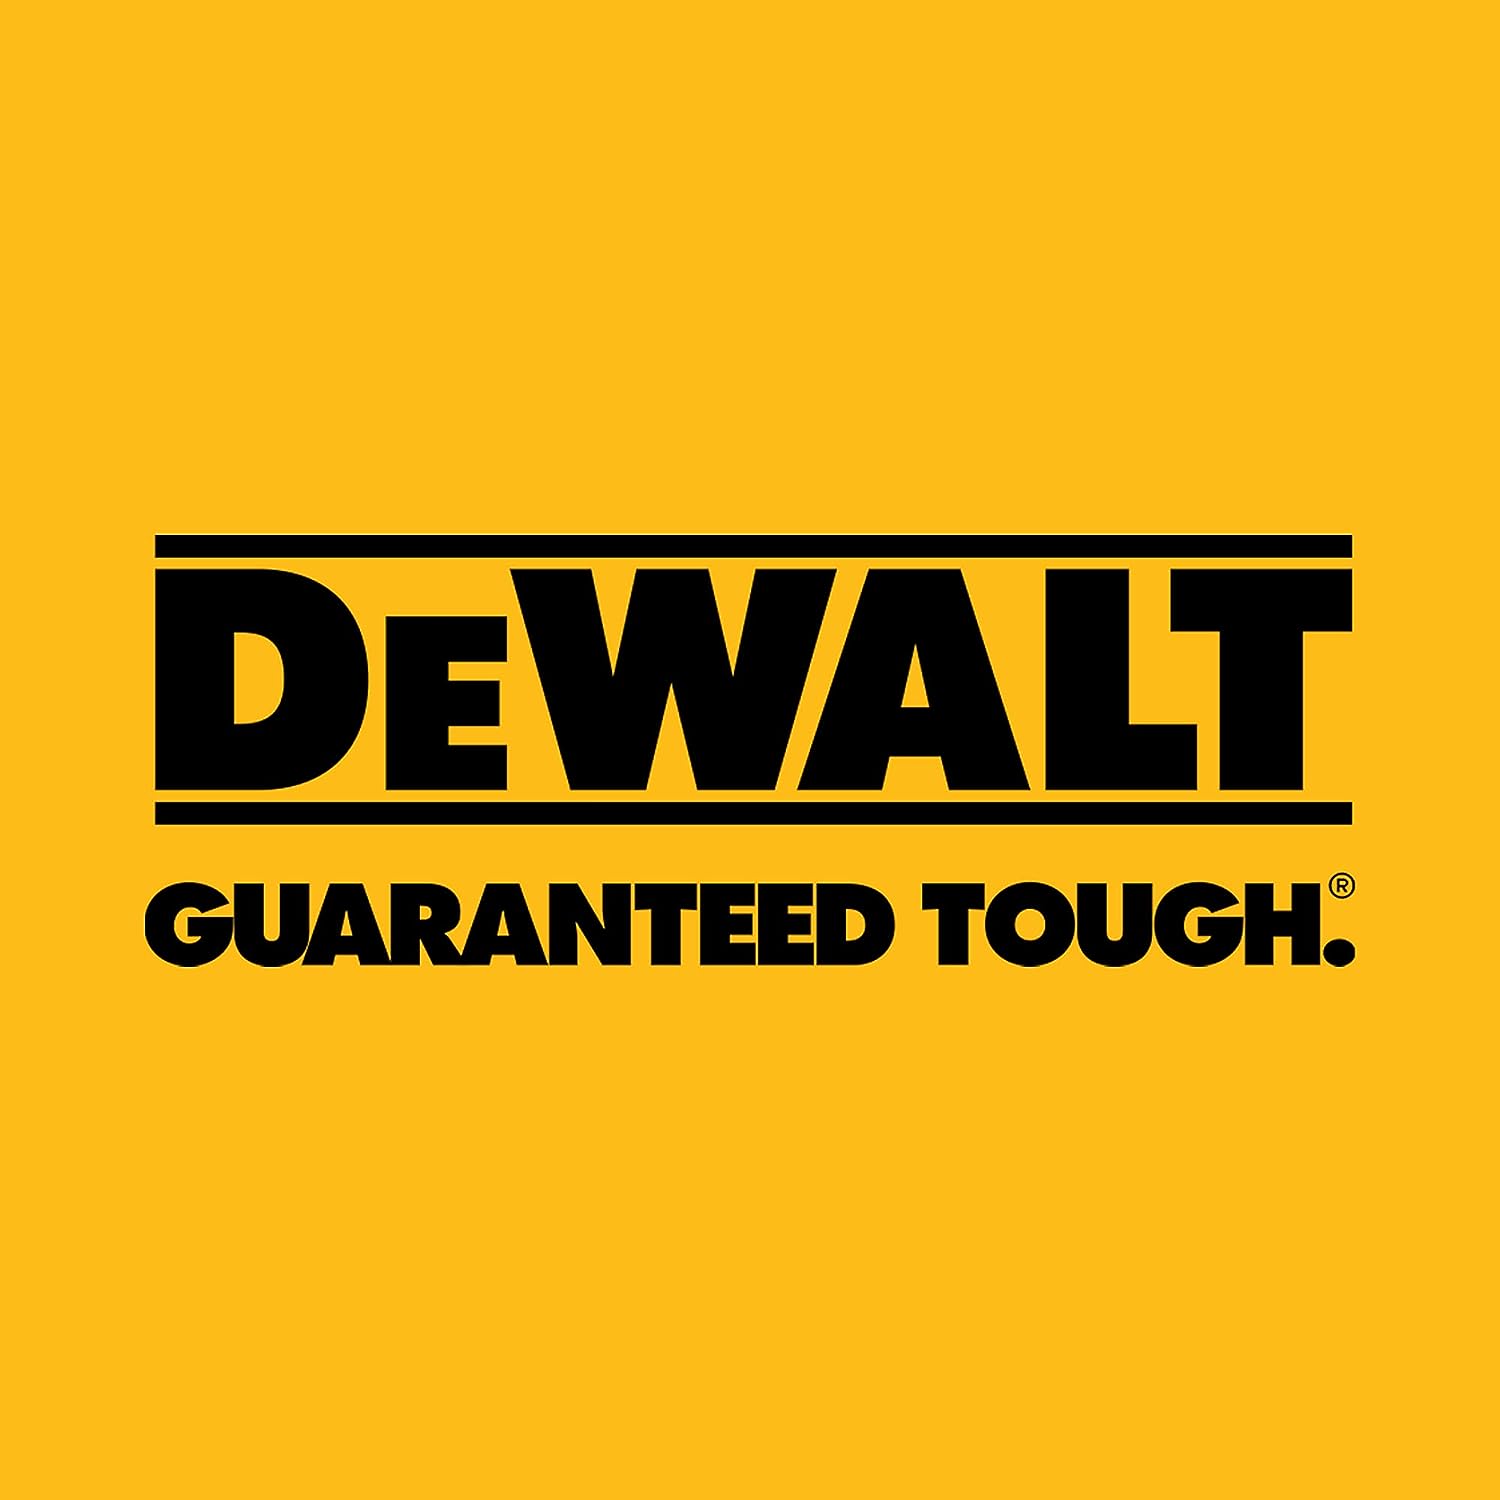 Dewalt 20V Max* Cordless Drill Combo Kit, 3-Tool (Dck340C2),Black/Yellow